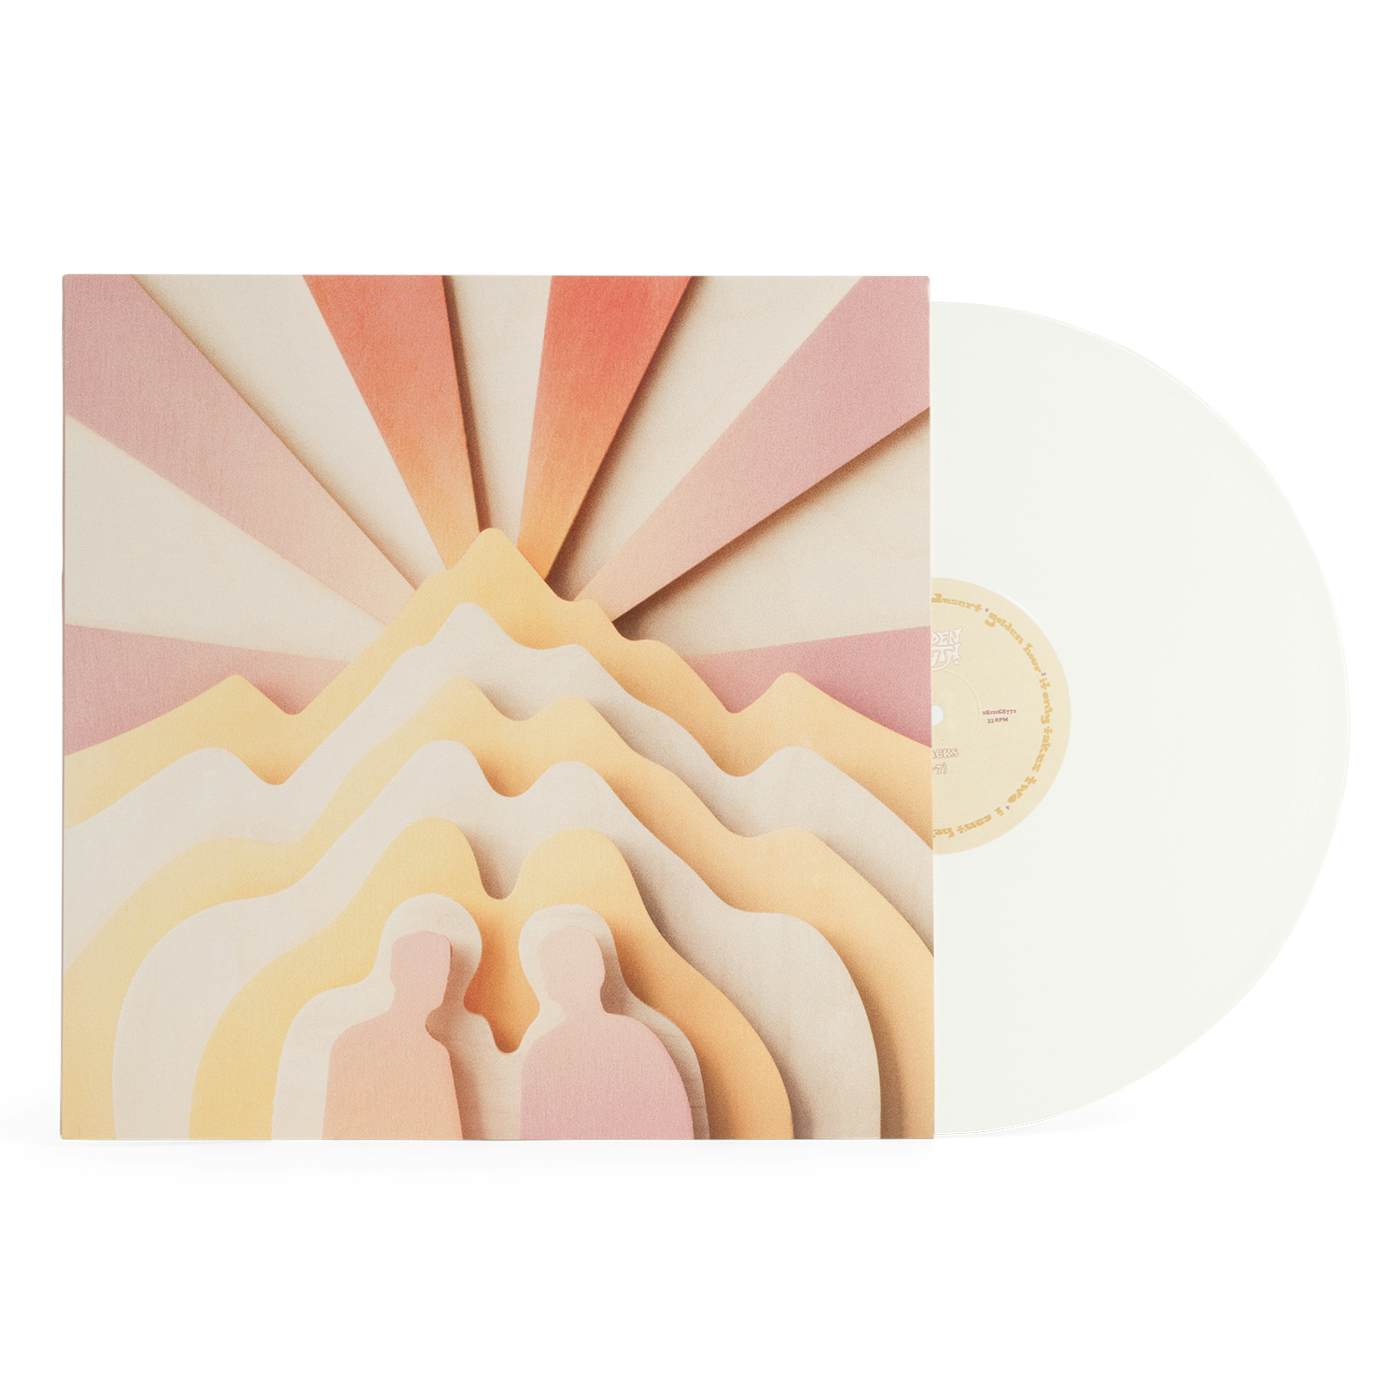 Surfaces Hidden Youth LP - White (Vinyl)